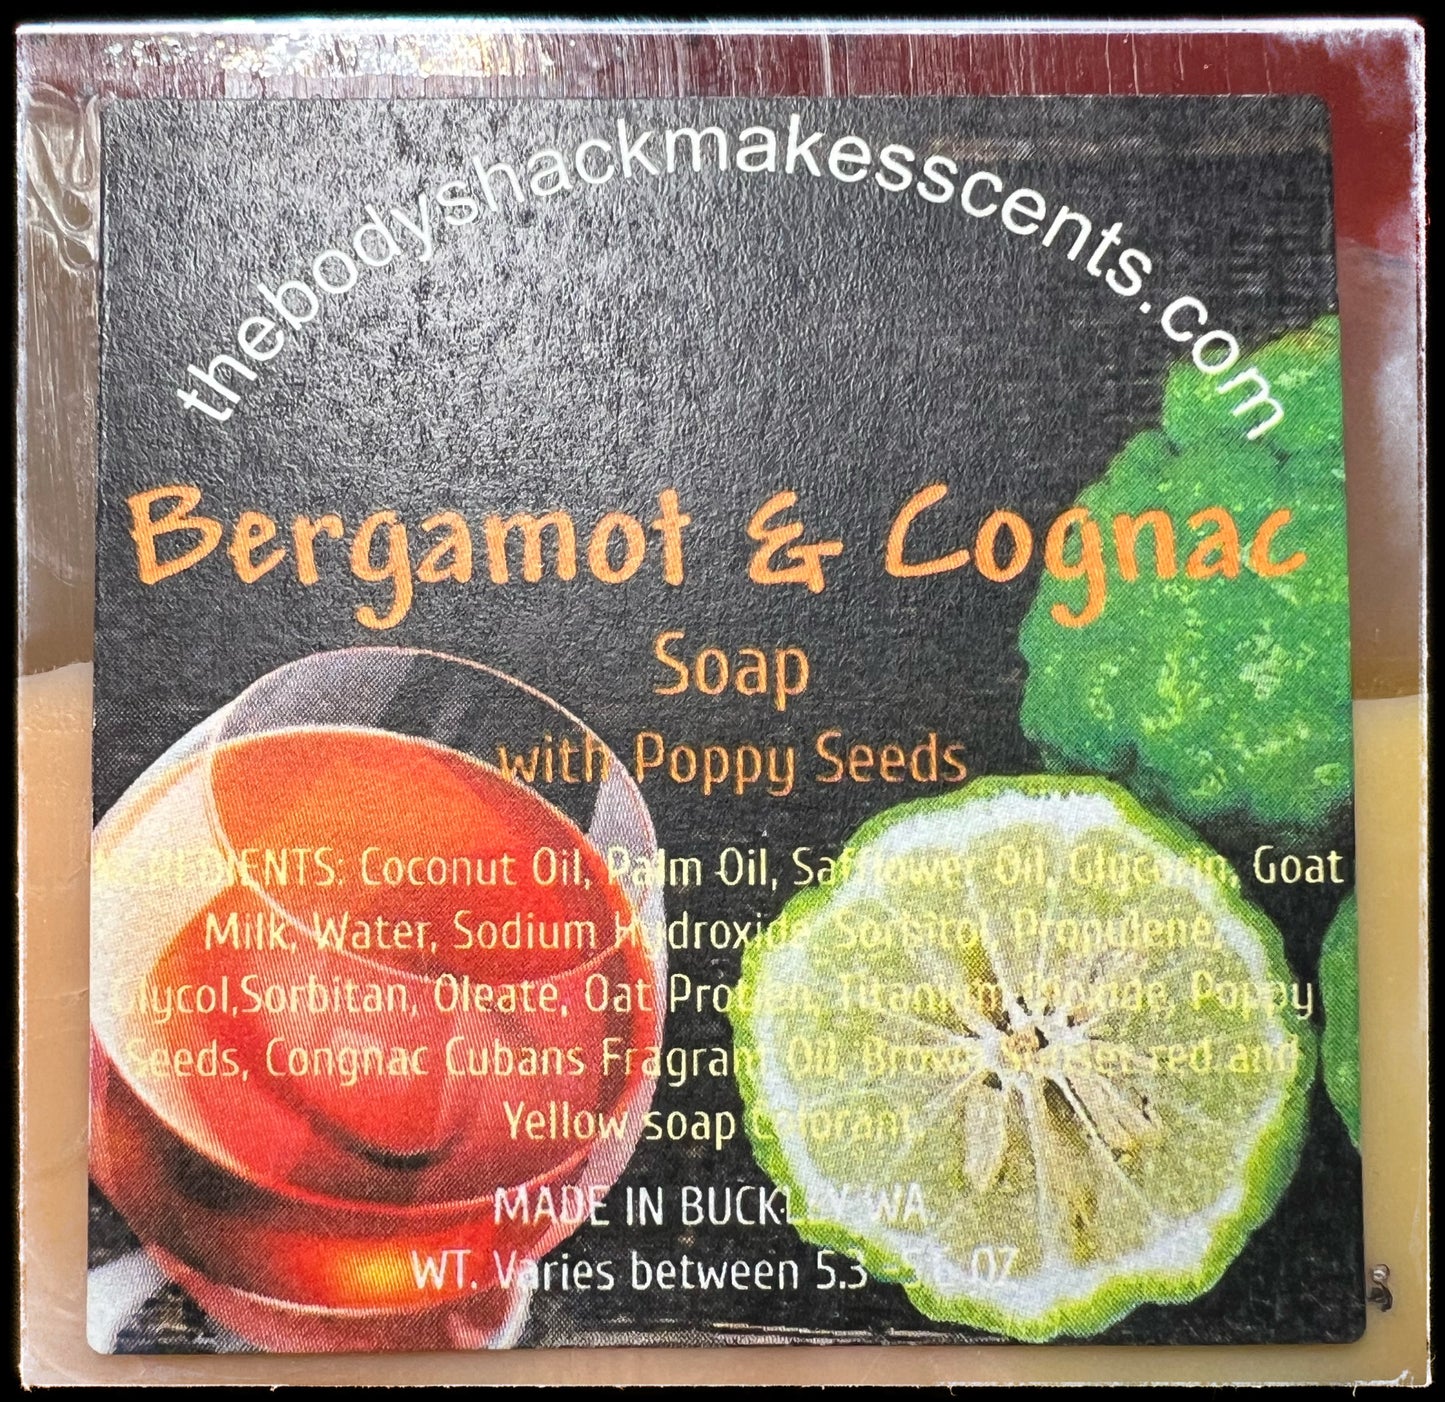 Bergamot & Cognac Soap